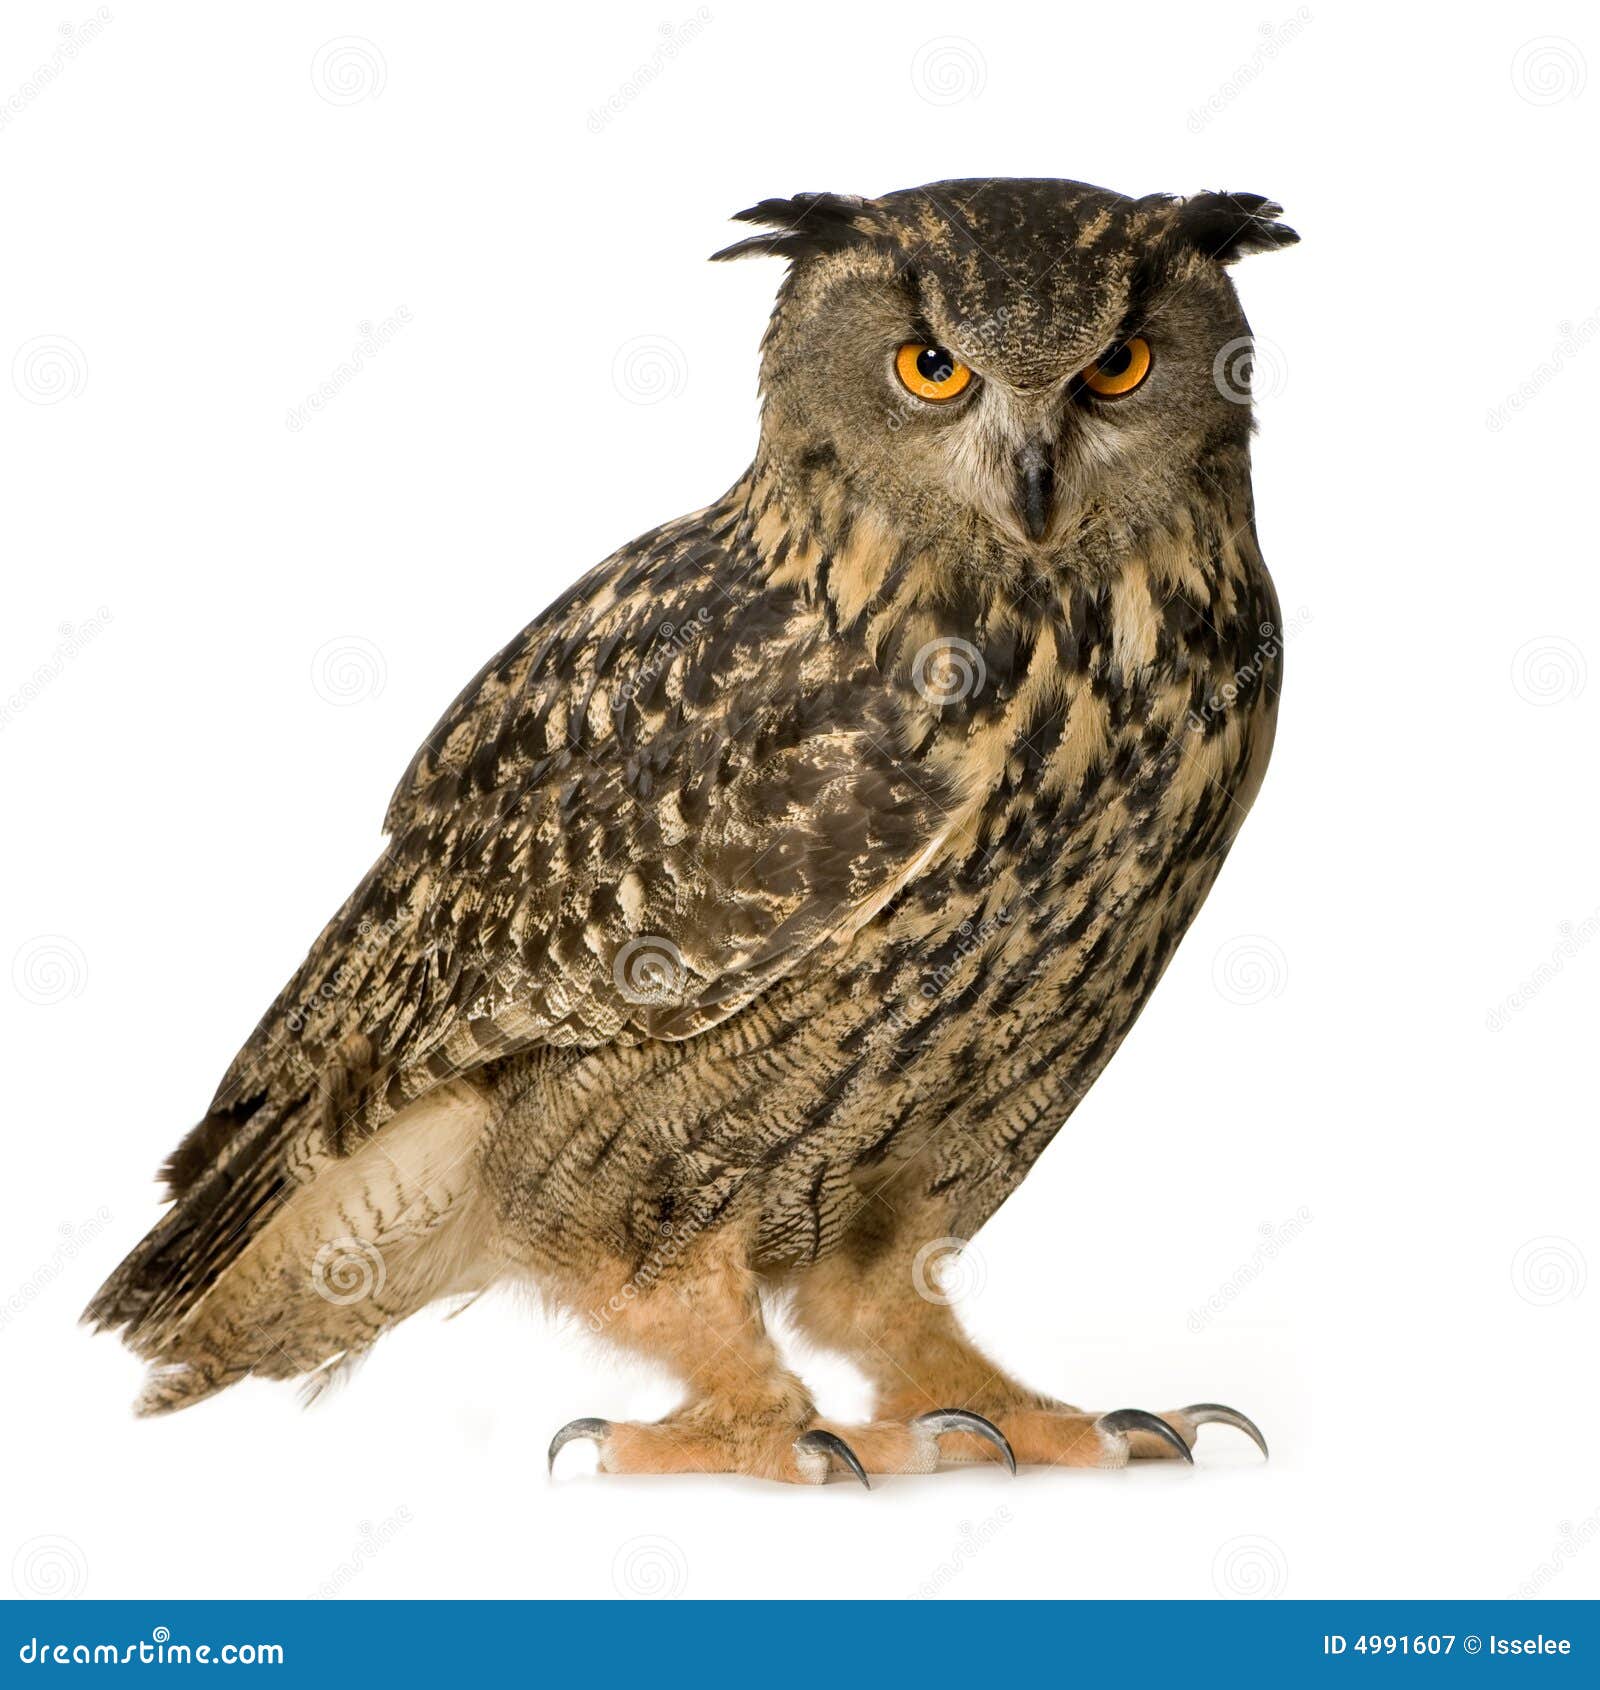 eurasian eagle owl - bubo bubo (22 months)